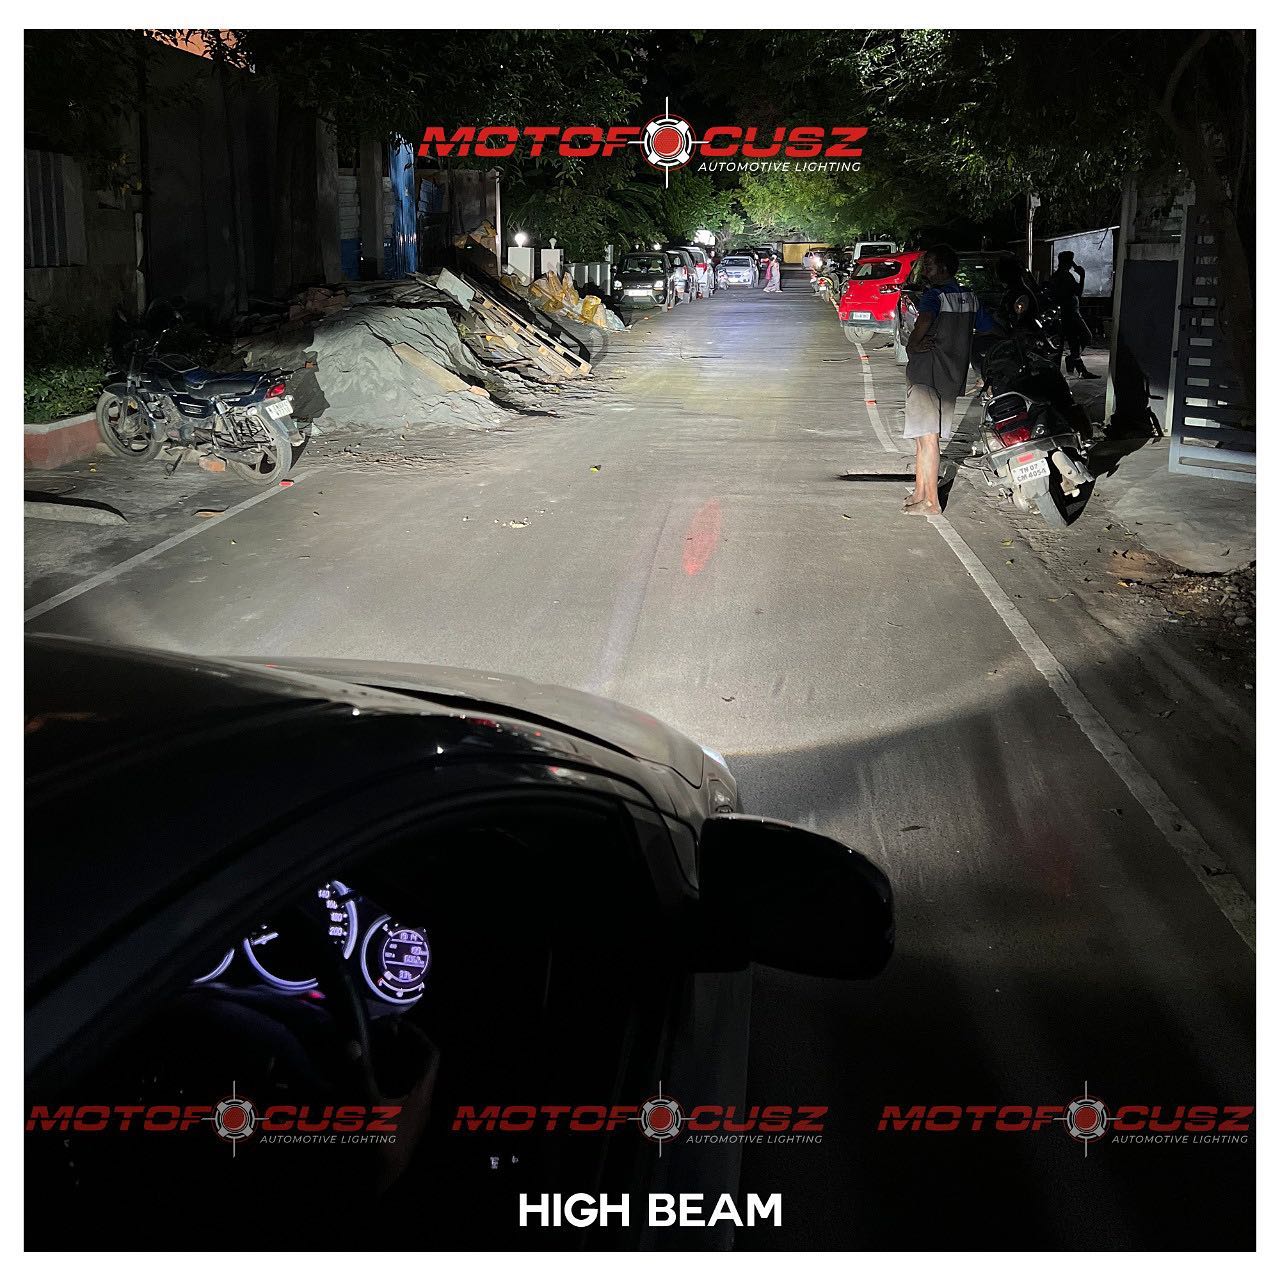 Honda city gets Projectors upgrade from Motofocusz Best Headlight customisation in Chennai